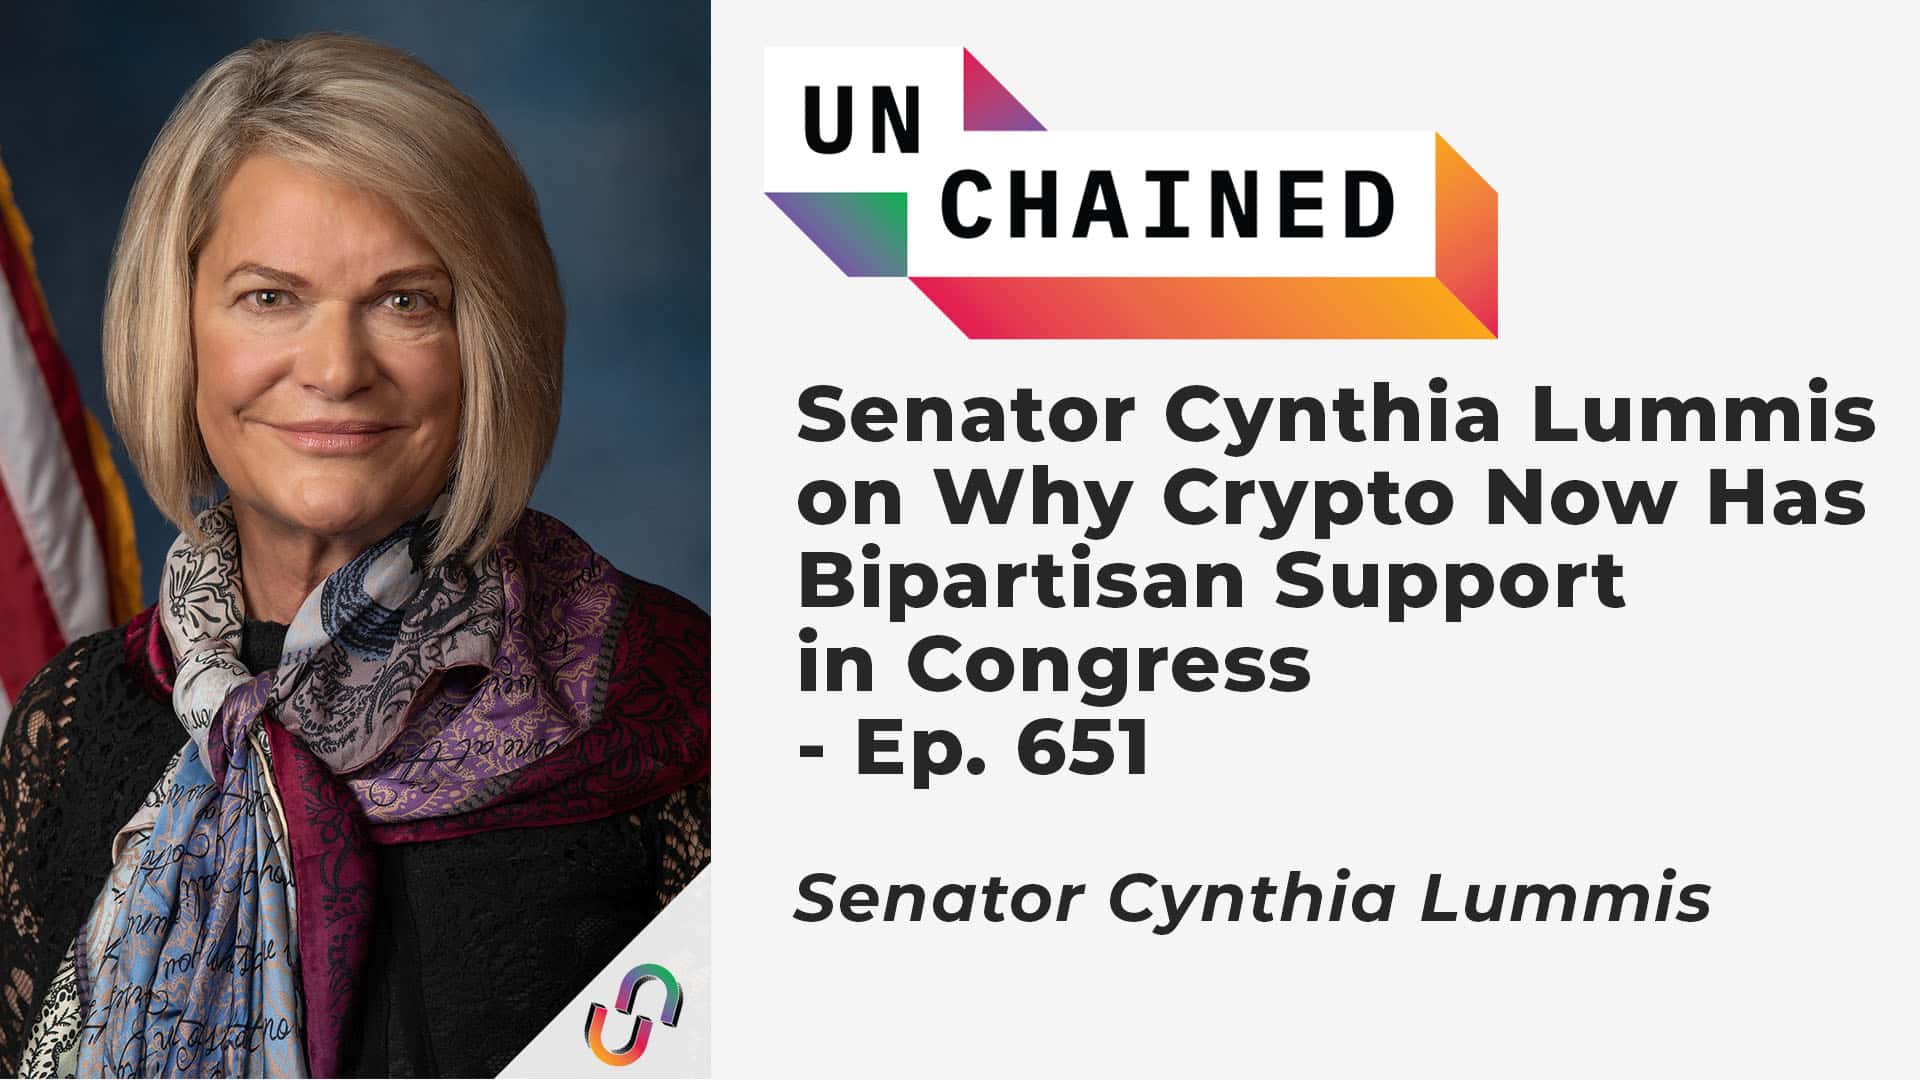 Senator Cynthia Lummis on Why Crypto Now Has Bipartisan Support in Congress - Ep. 651